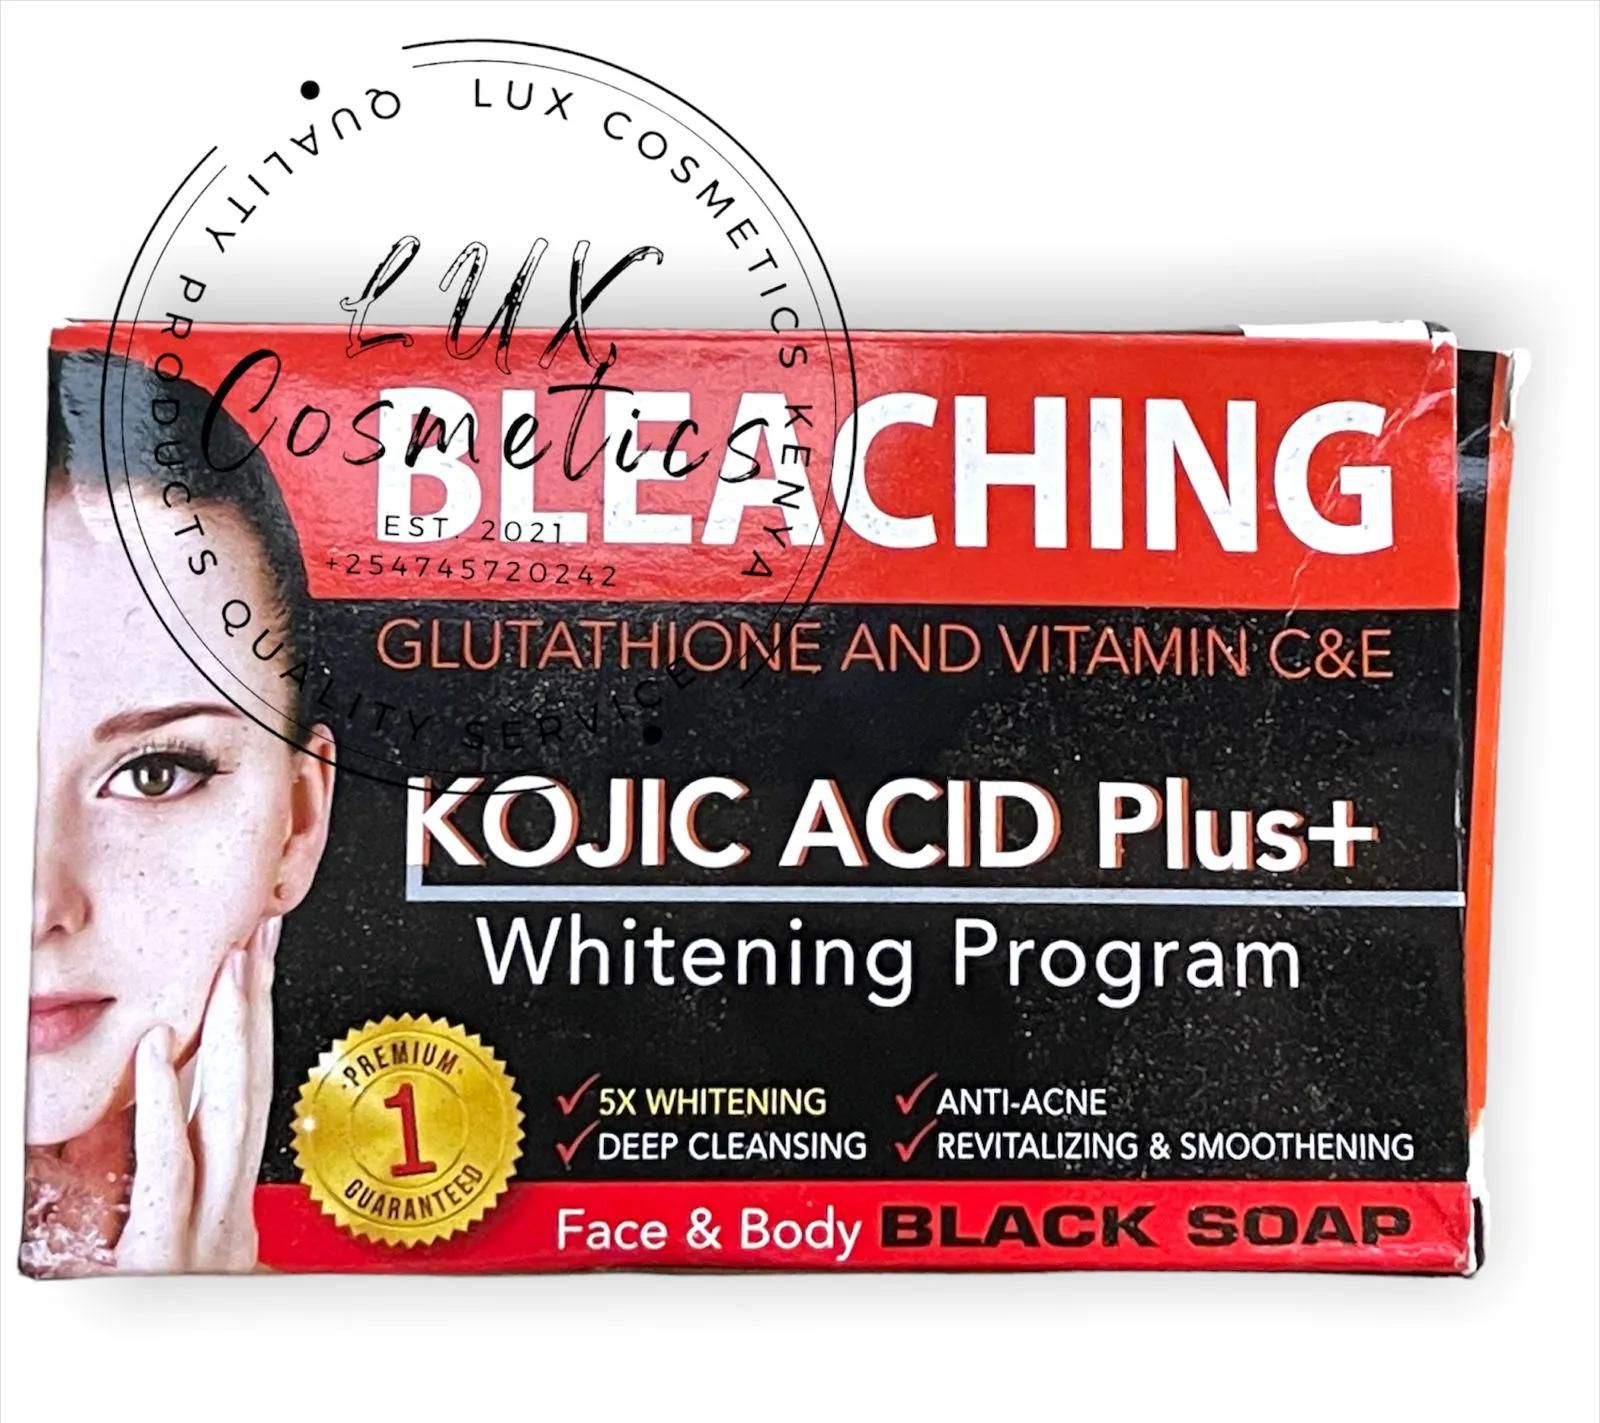 Neon Bleaching Glutathione and Vitamin C&E Kojic Acid Plus+ Whitening Program Face & Body Black Soap 135g